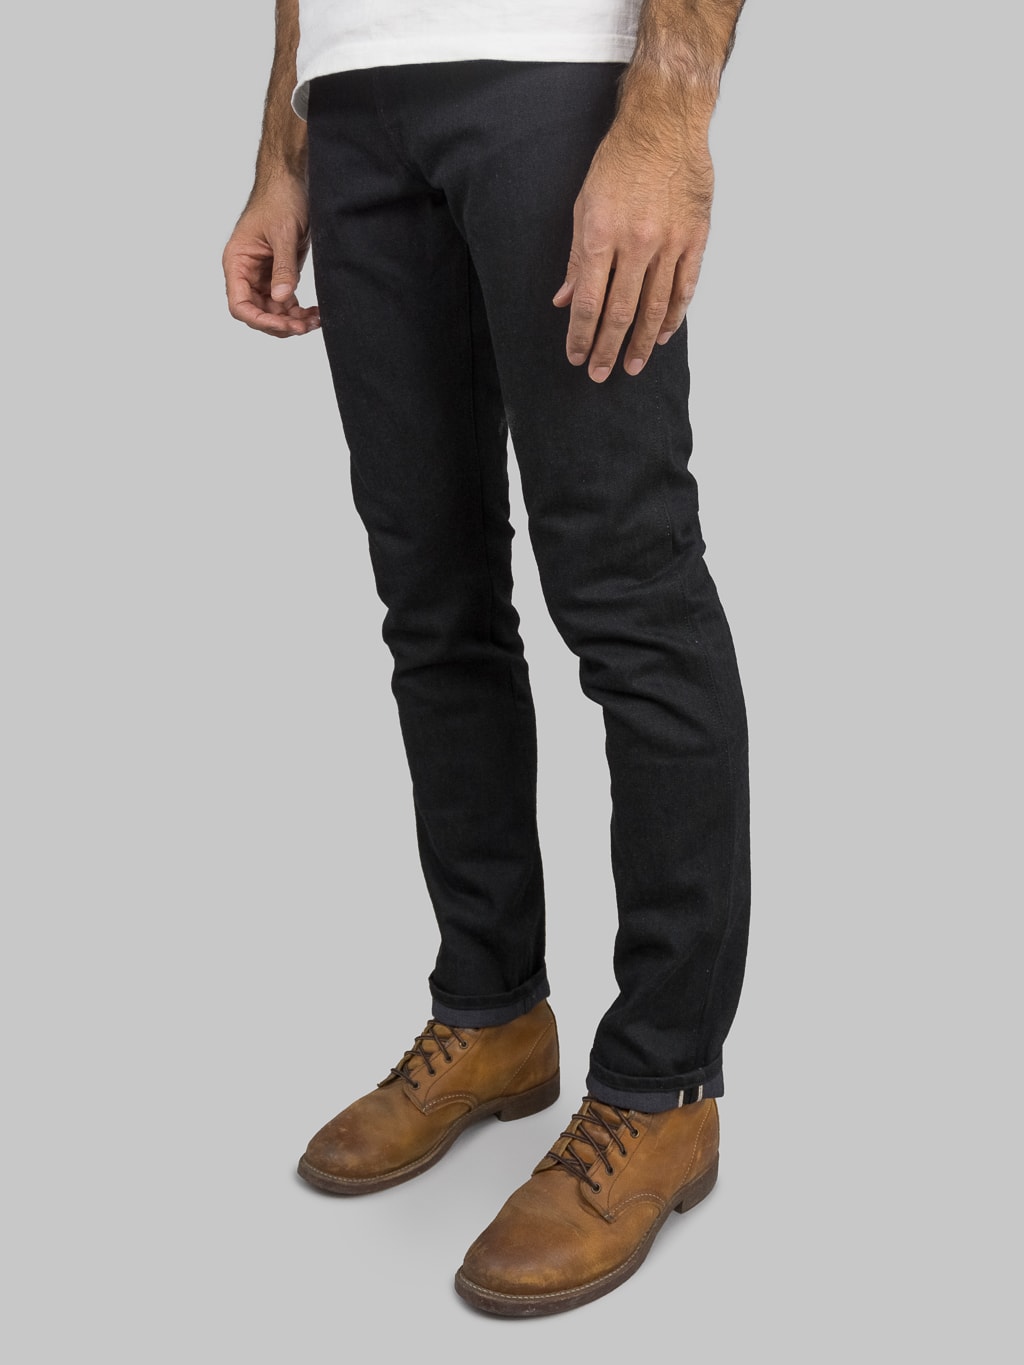 Freenote Cloth Rios Black Grey Japanese Denim Slim Straight Jeans side fit